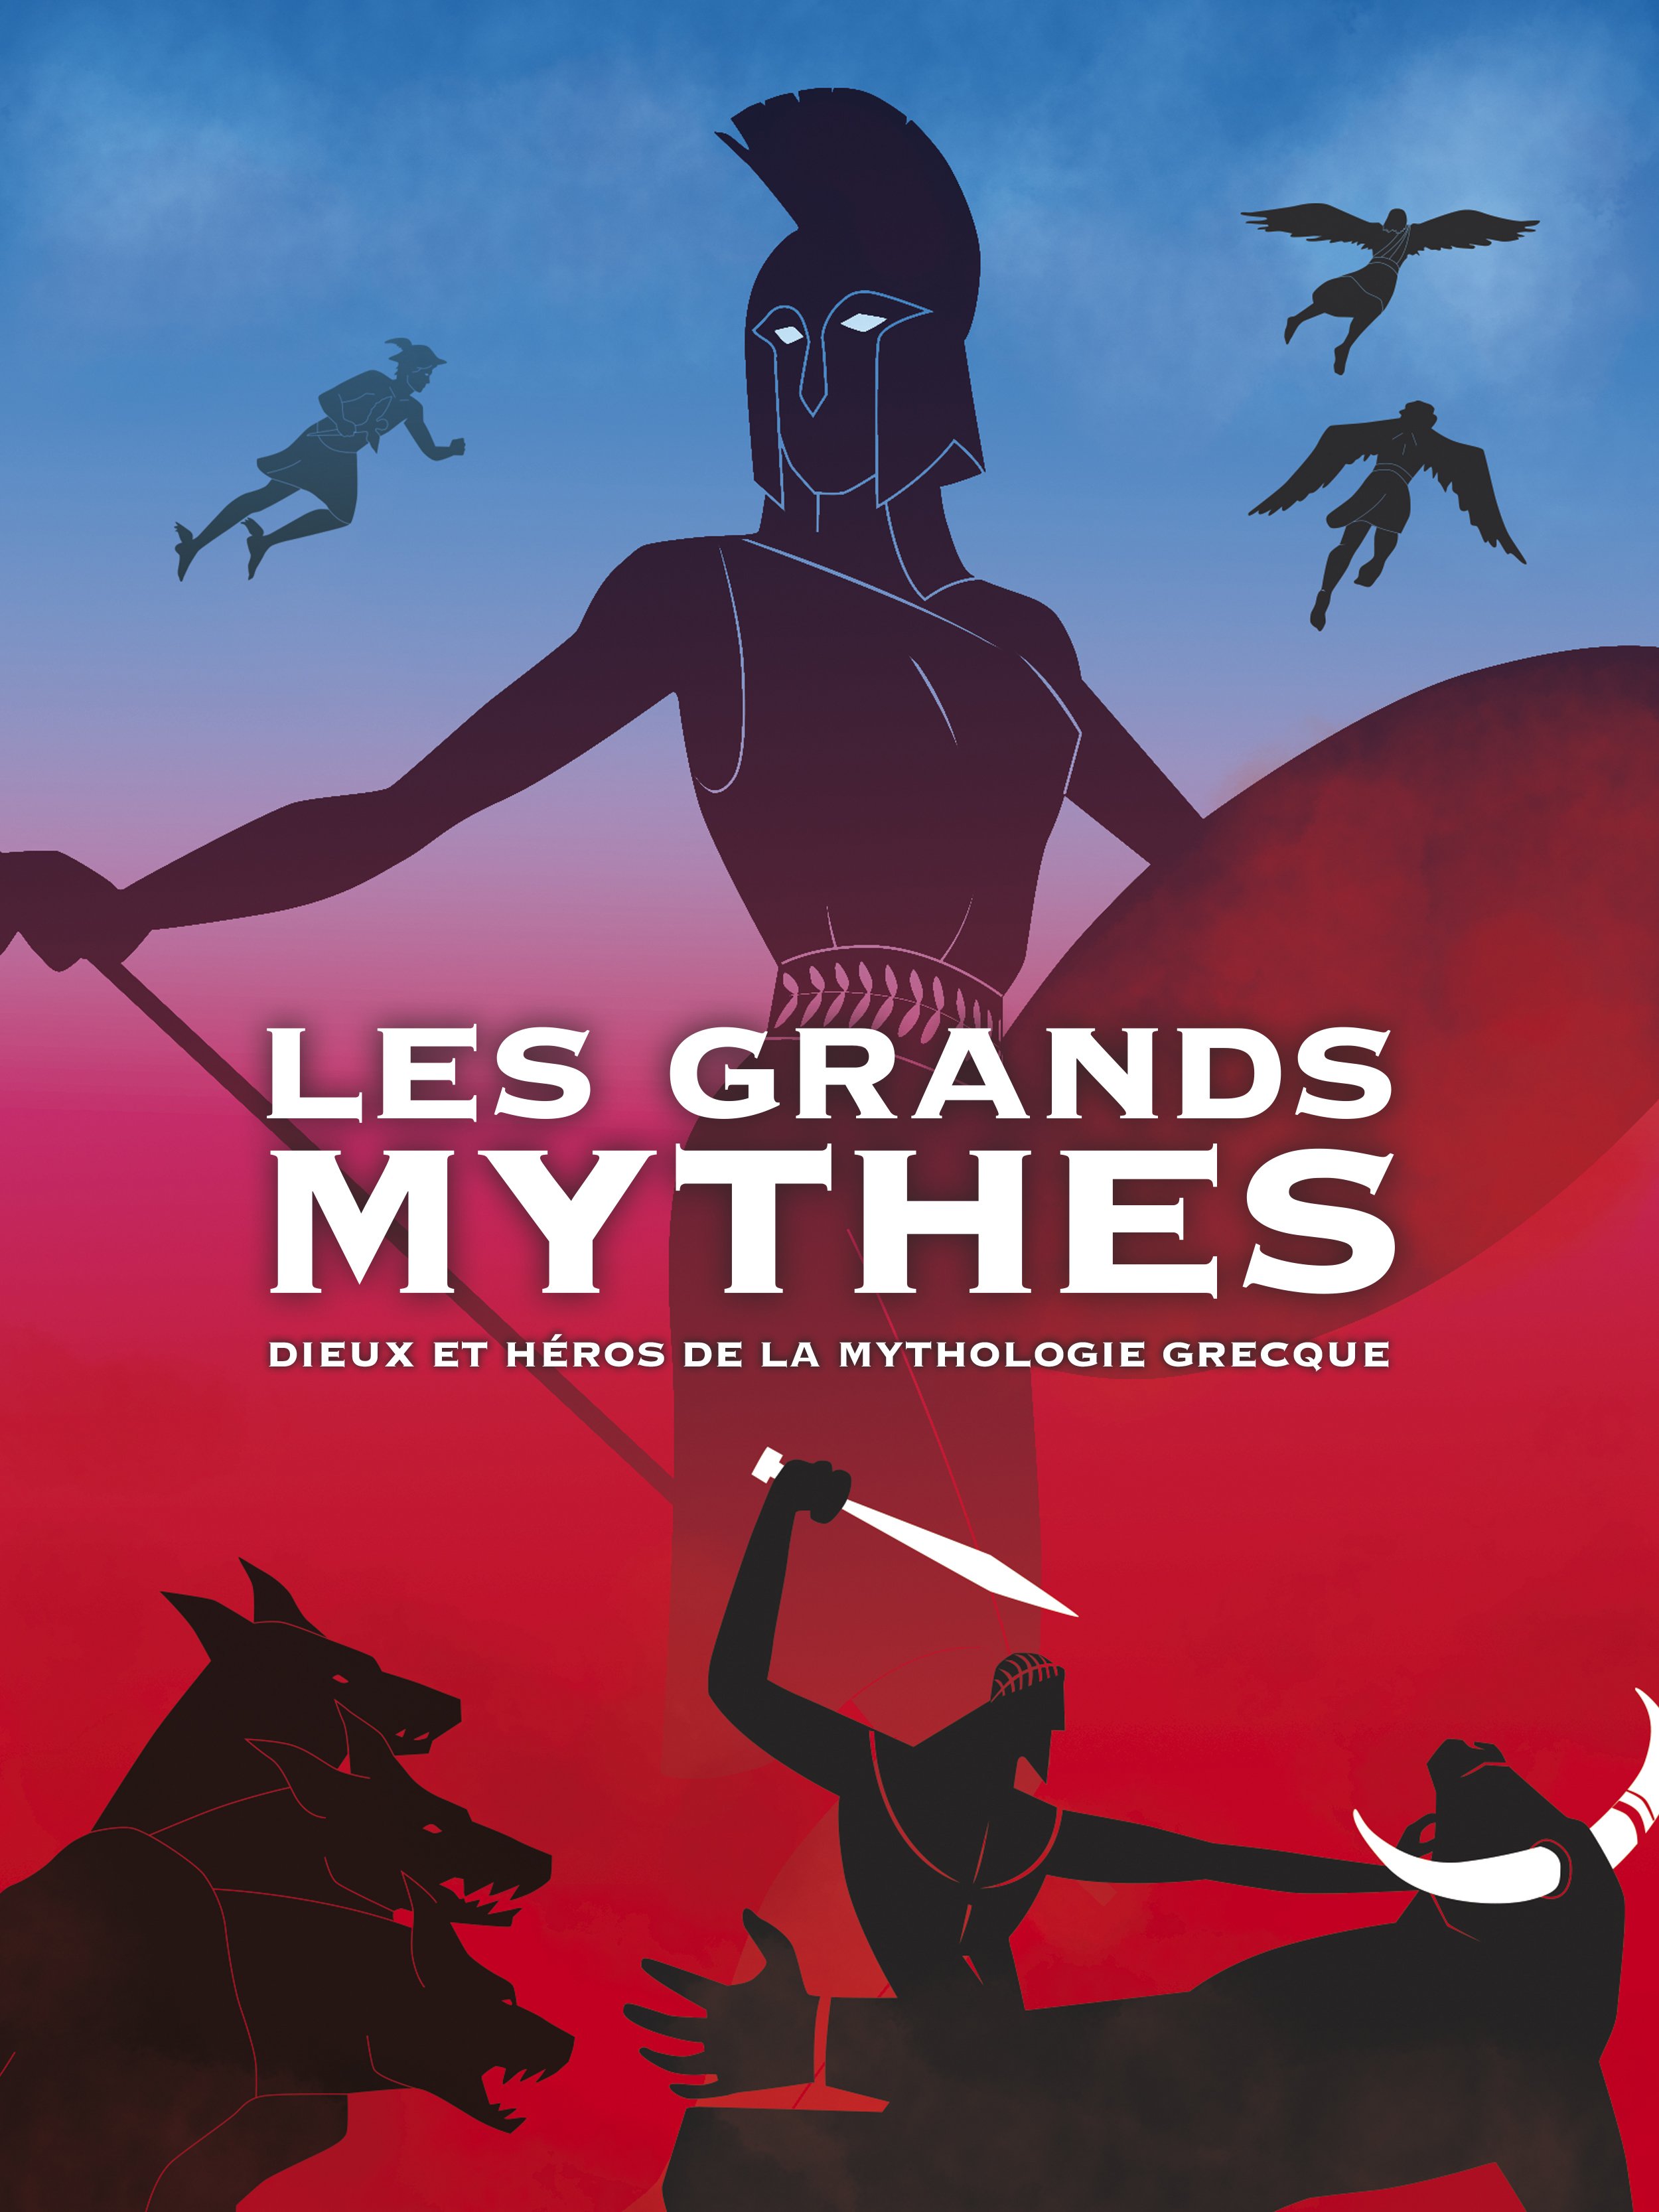 Les Grands mythes